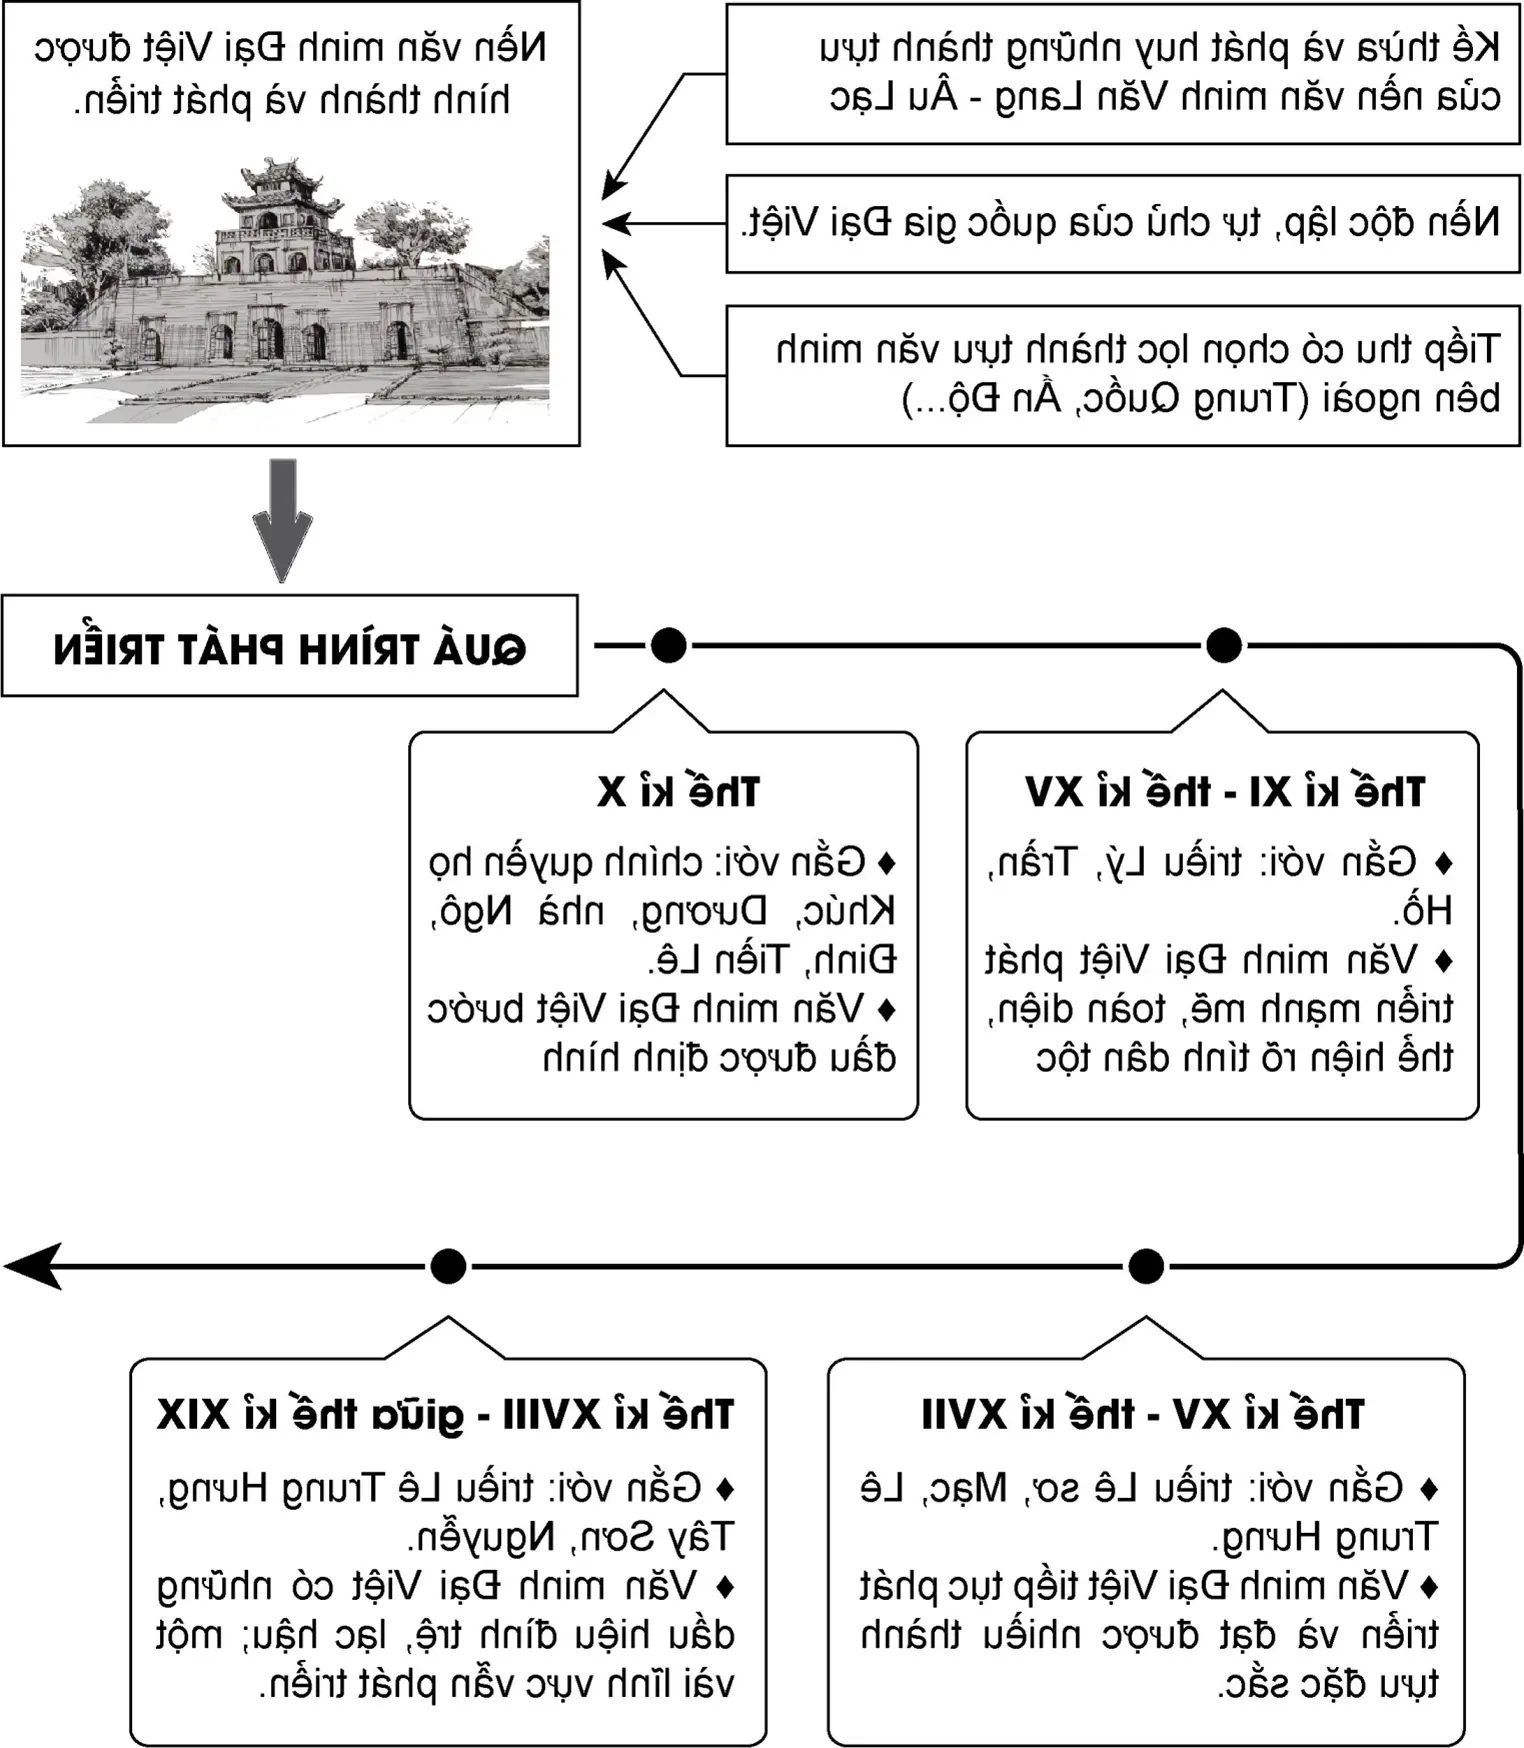 Buatlah peta pikiran tentang landasan dan proses perkembangan peradaban Dai Viet